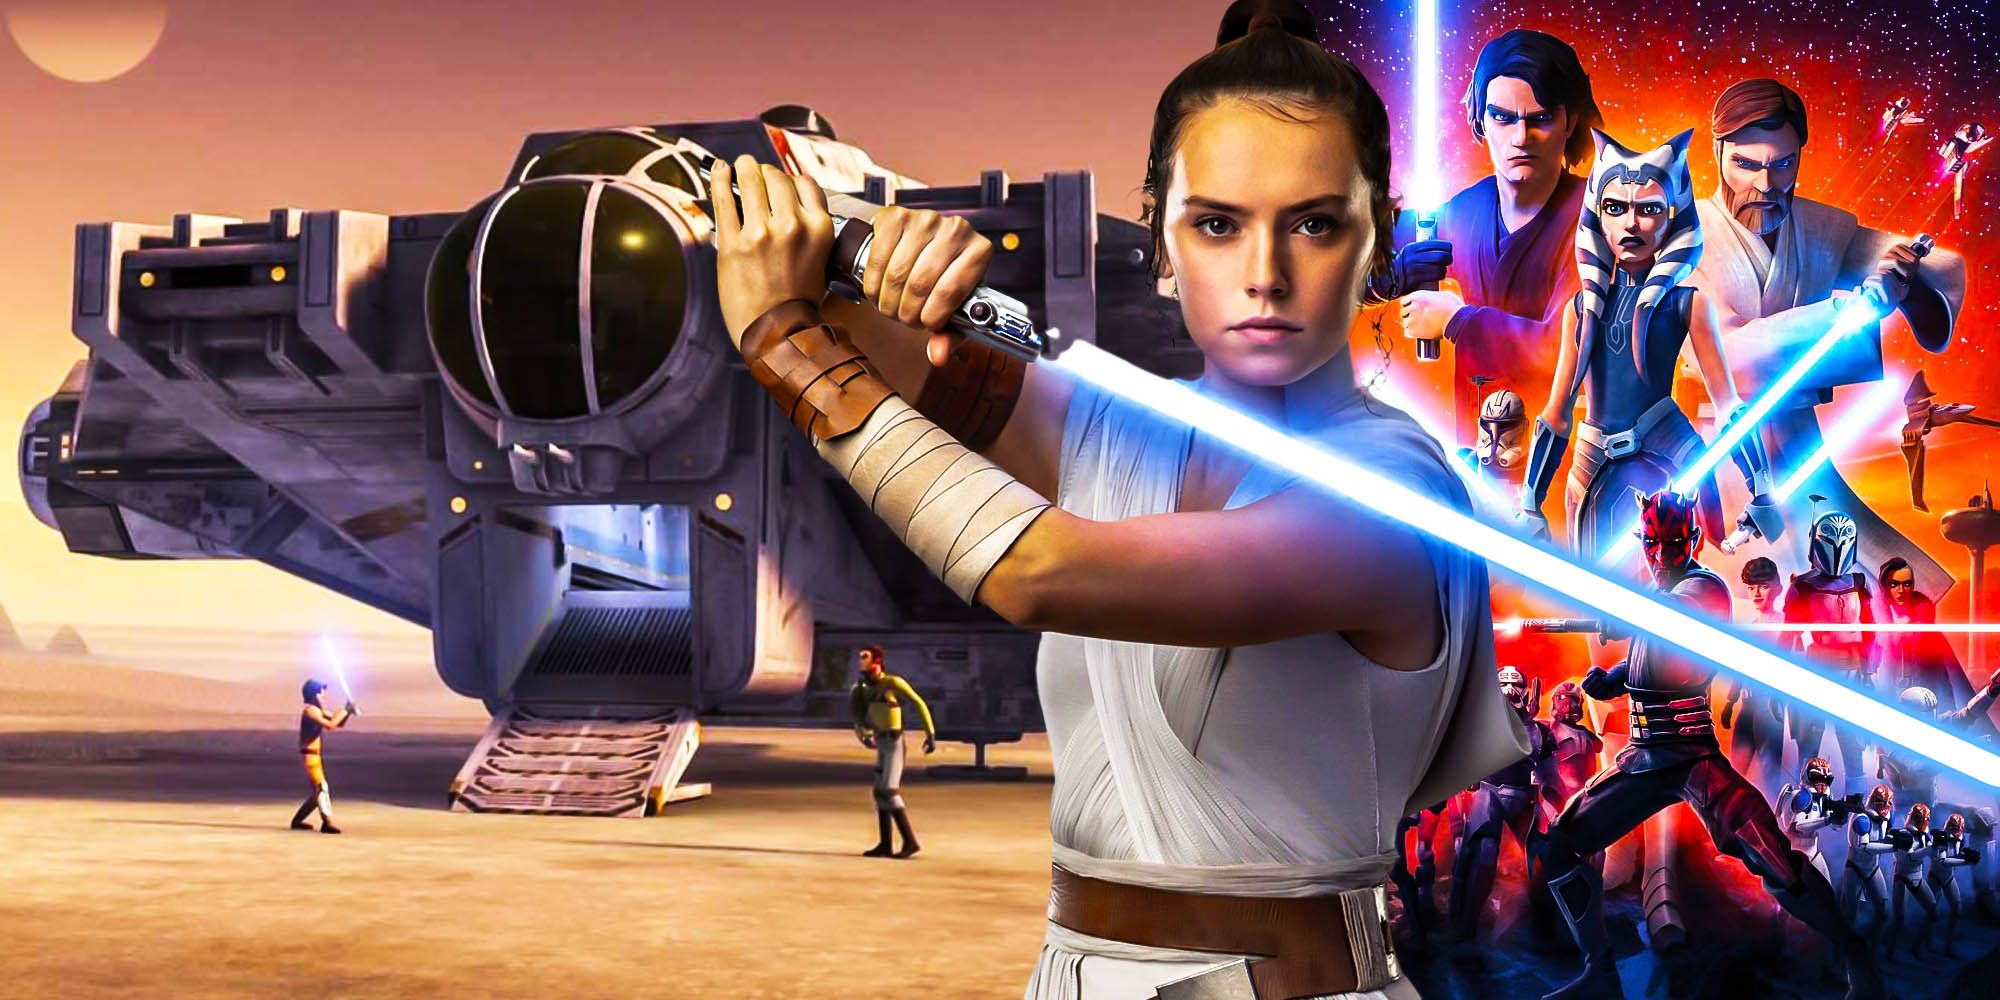 Star wars the rise of skywalker Clone wars Rebels connections Rey ghost ahsoka